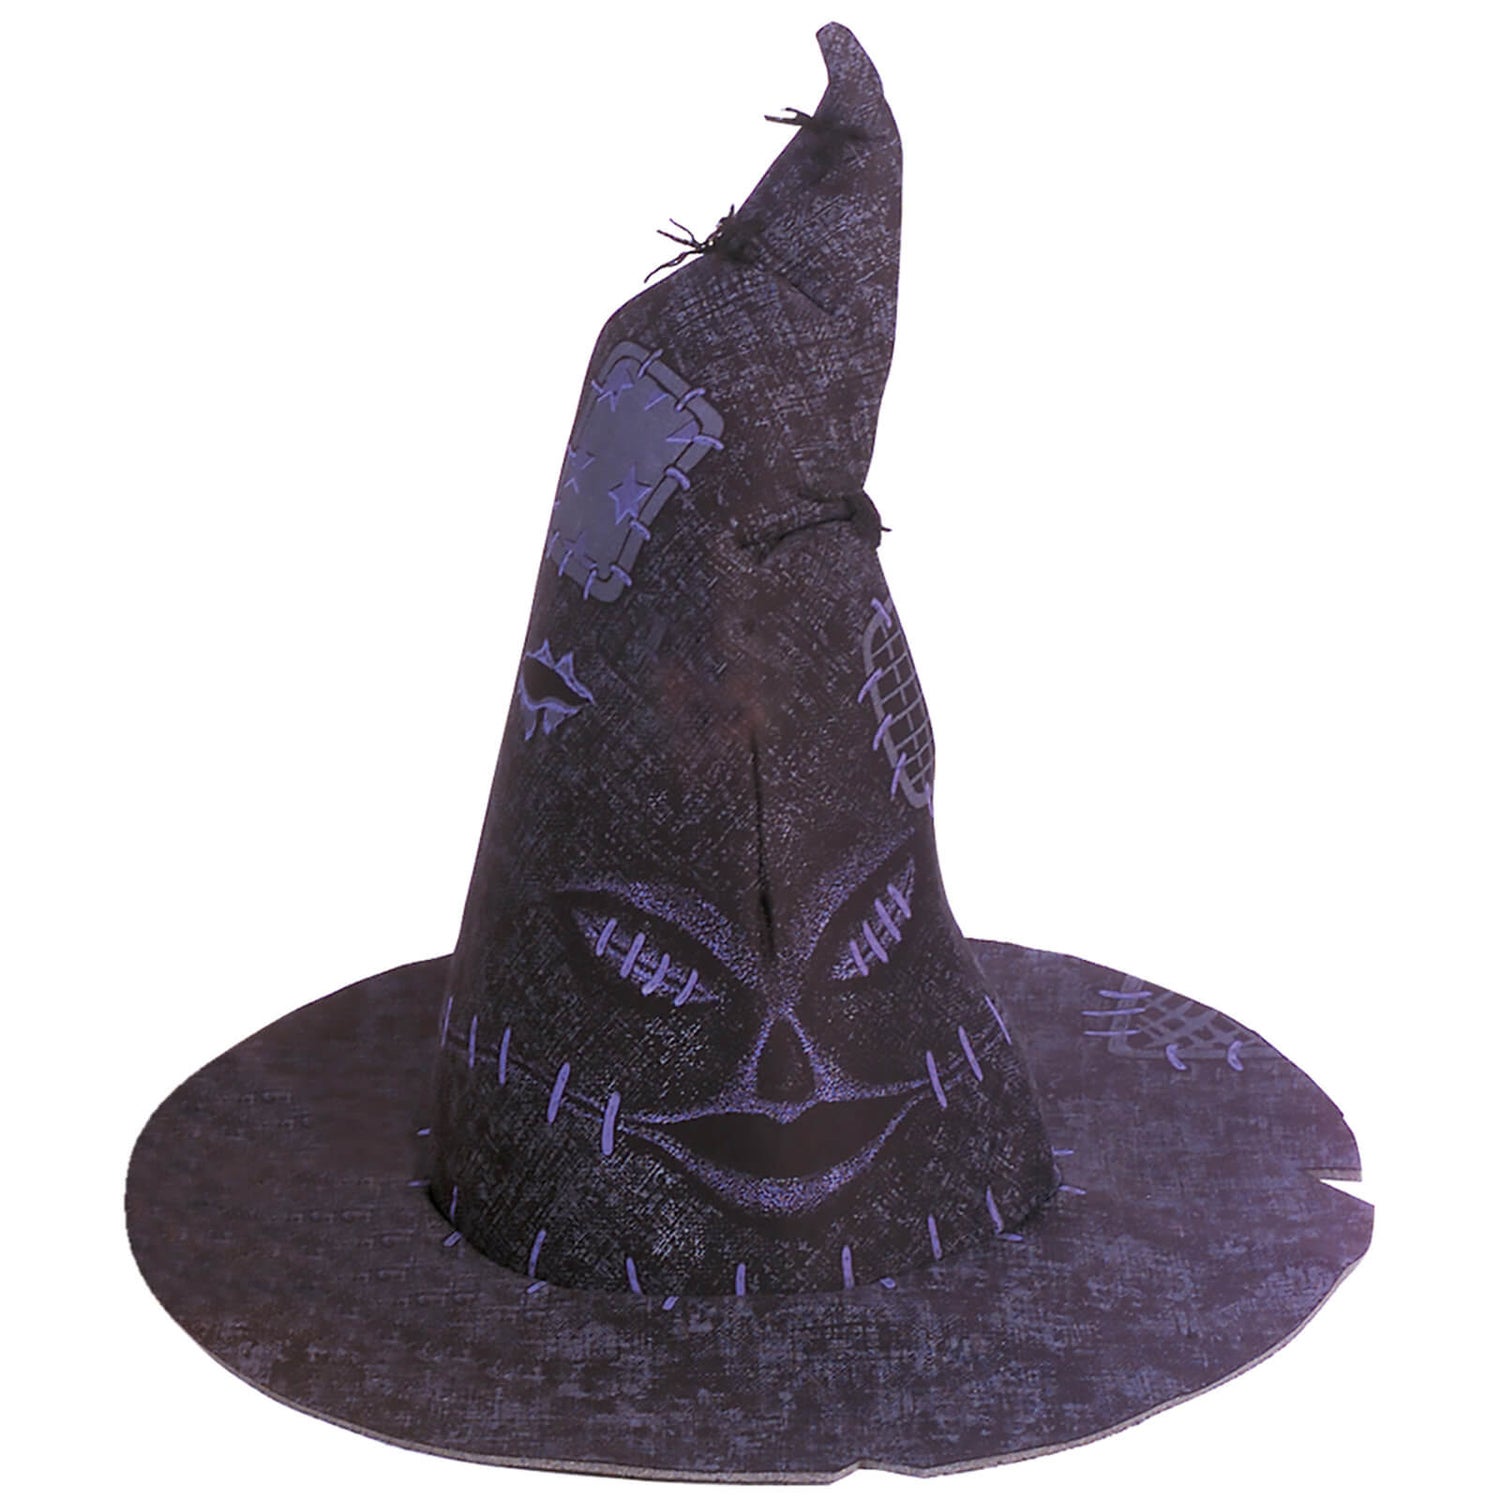 Harry Potter Wizarding World Costume Sorting Hat